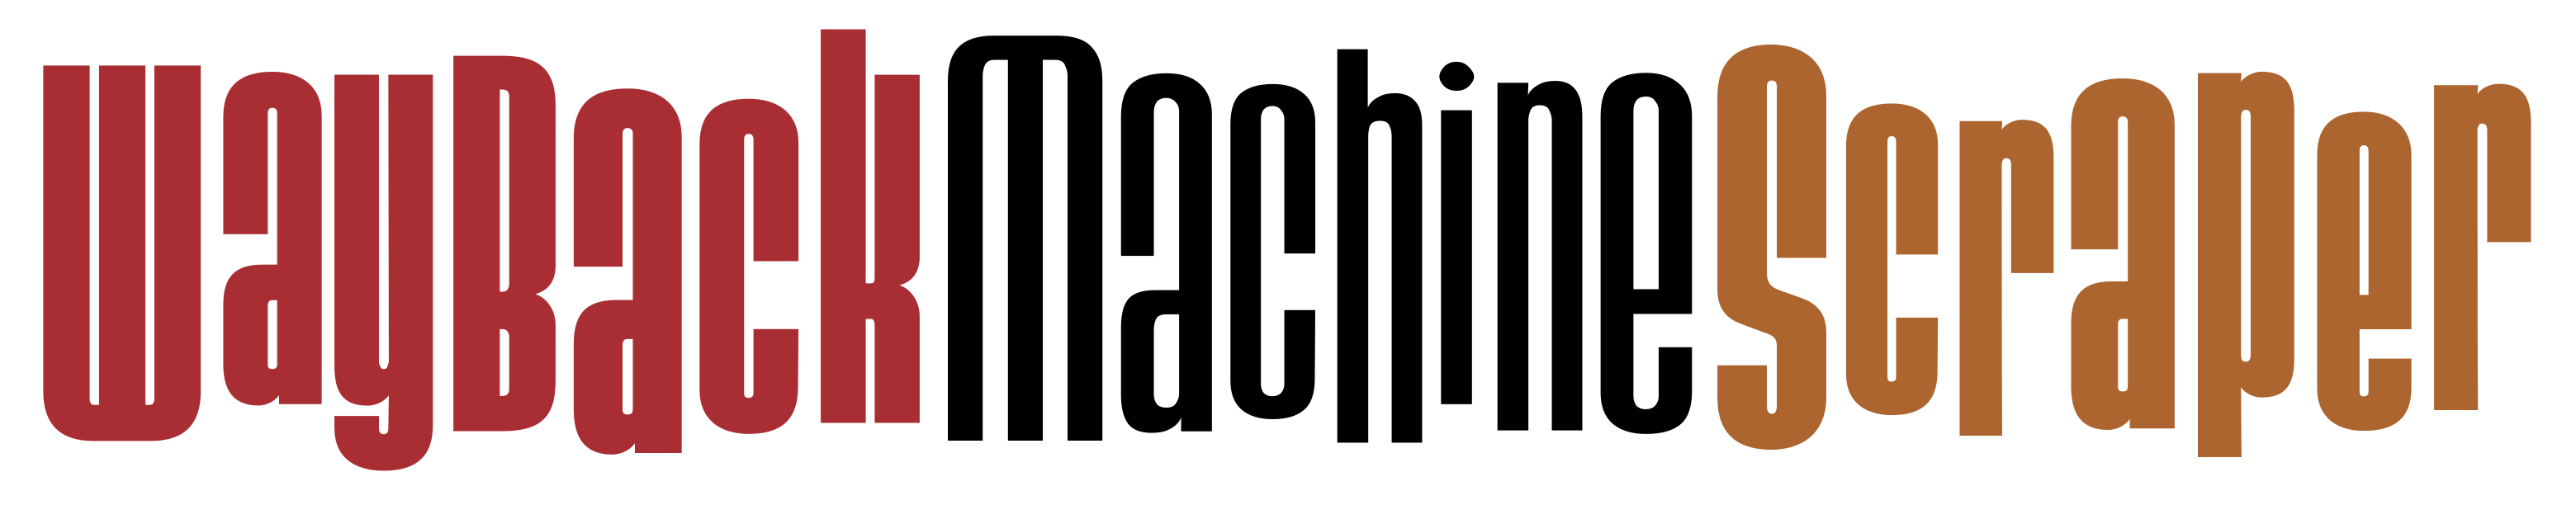 The Wayback Machine Scraper Logo